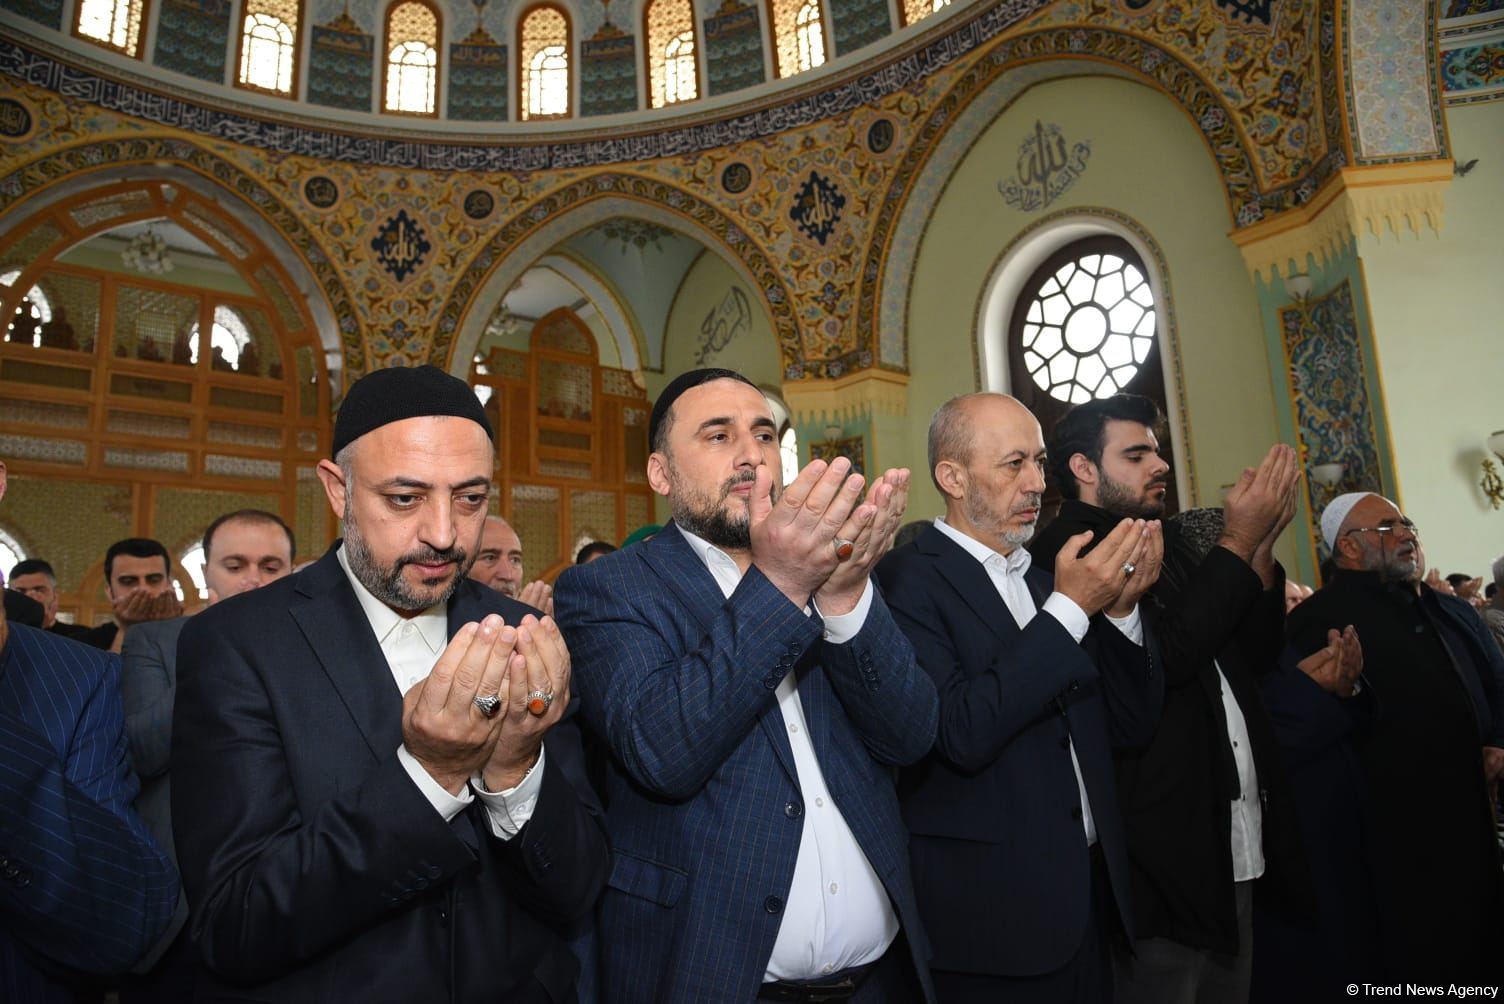 В бакинской мечети Тезепир совершен праздничный намаз (ФОТО)